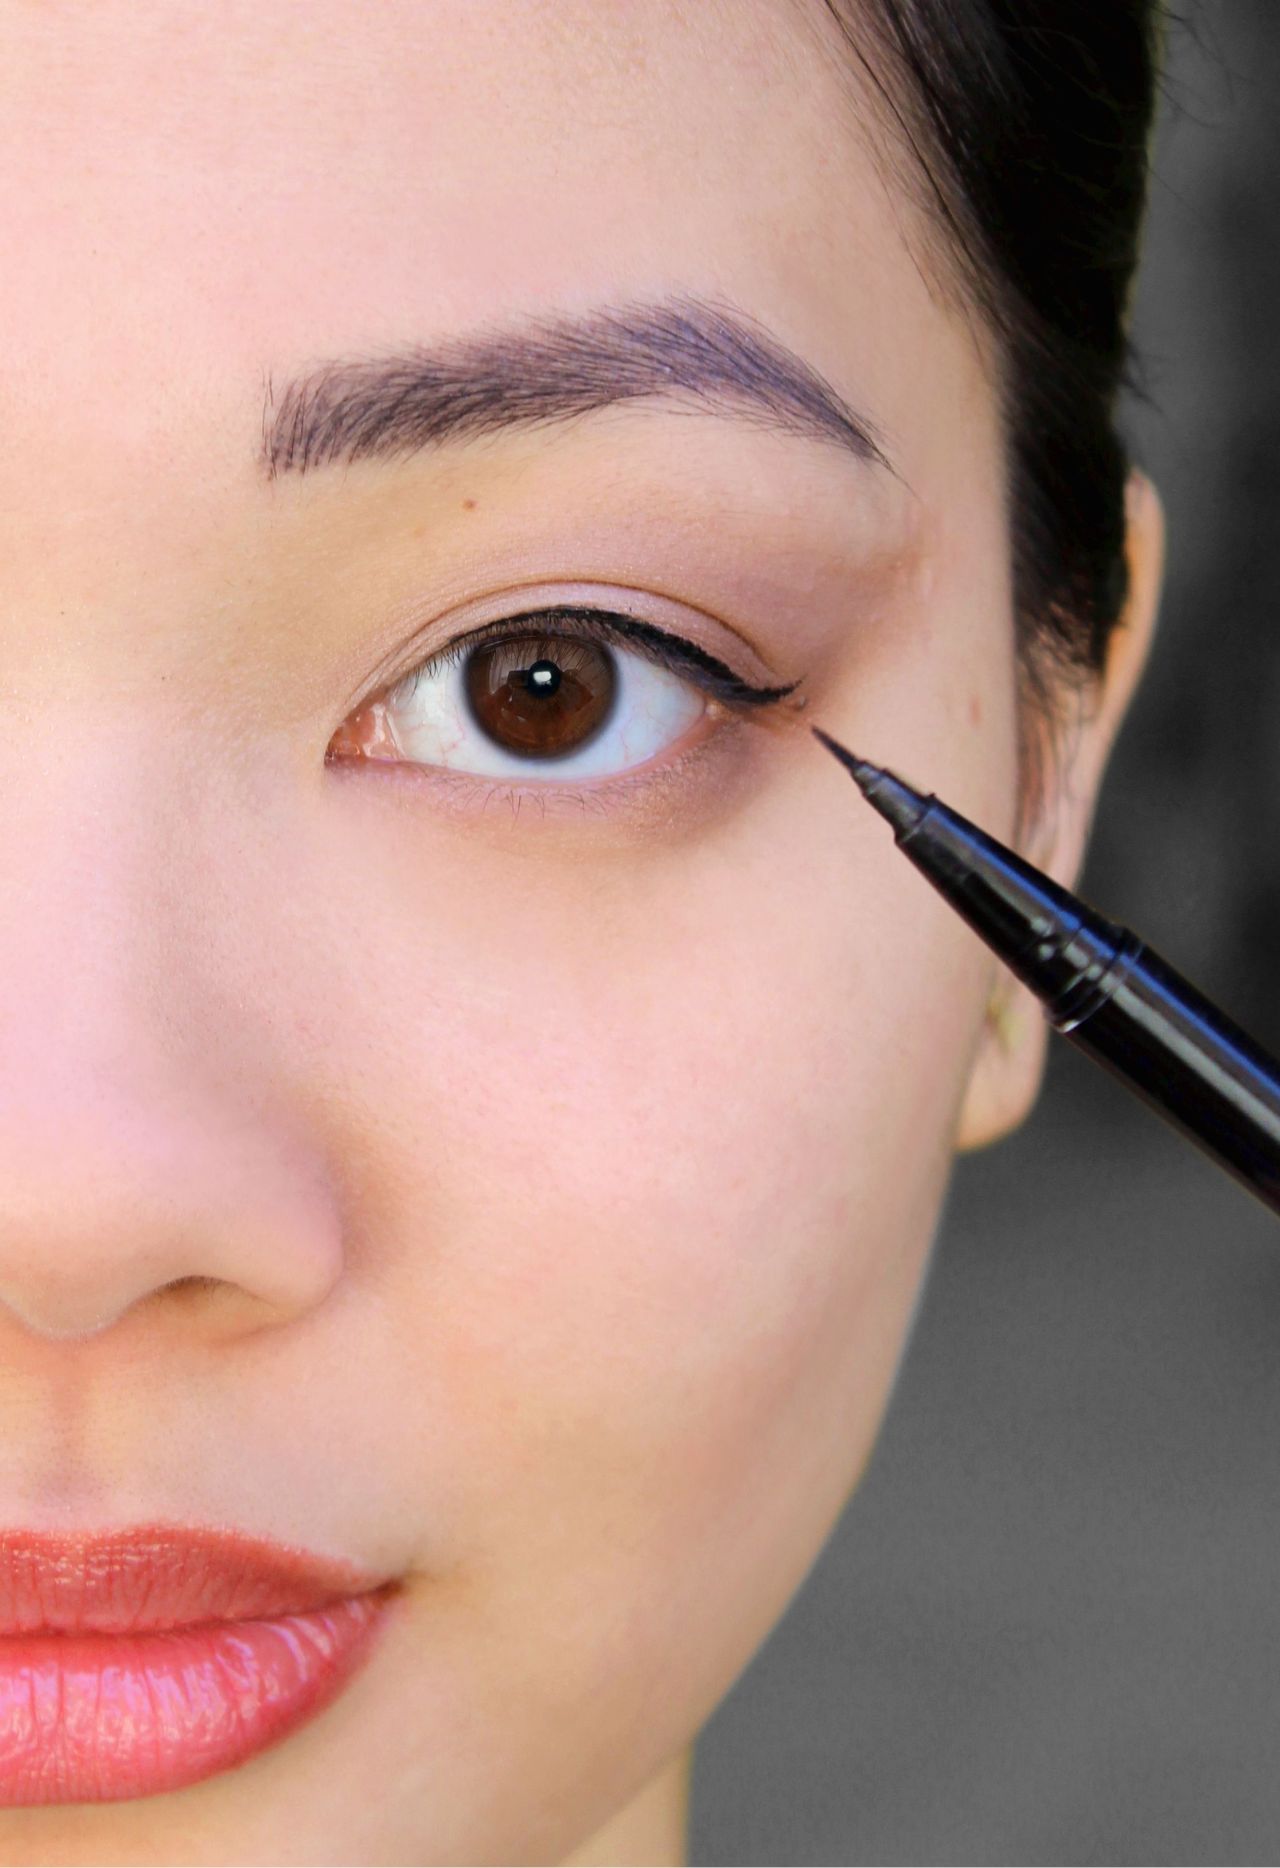 Eyeliner Tips To Make Small Eyes Look Bigger